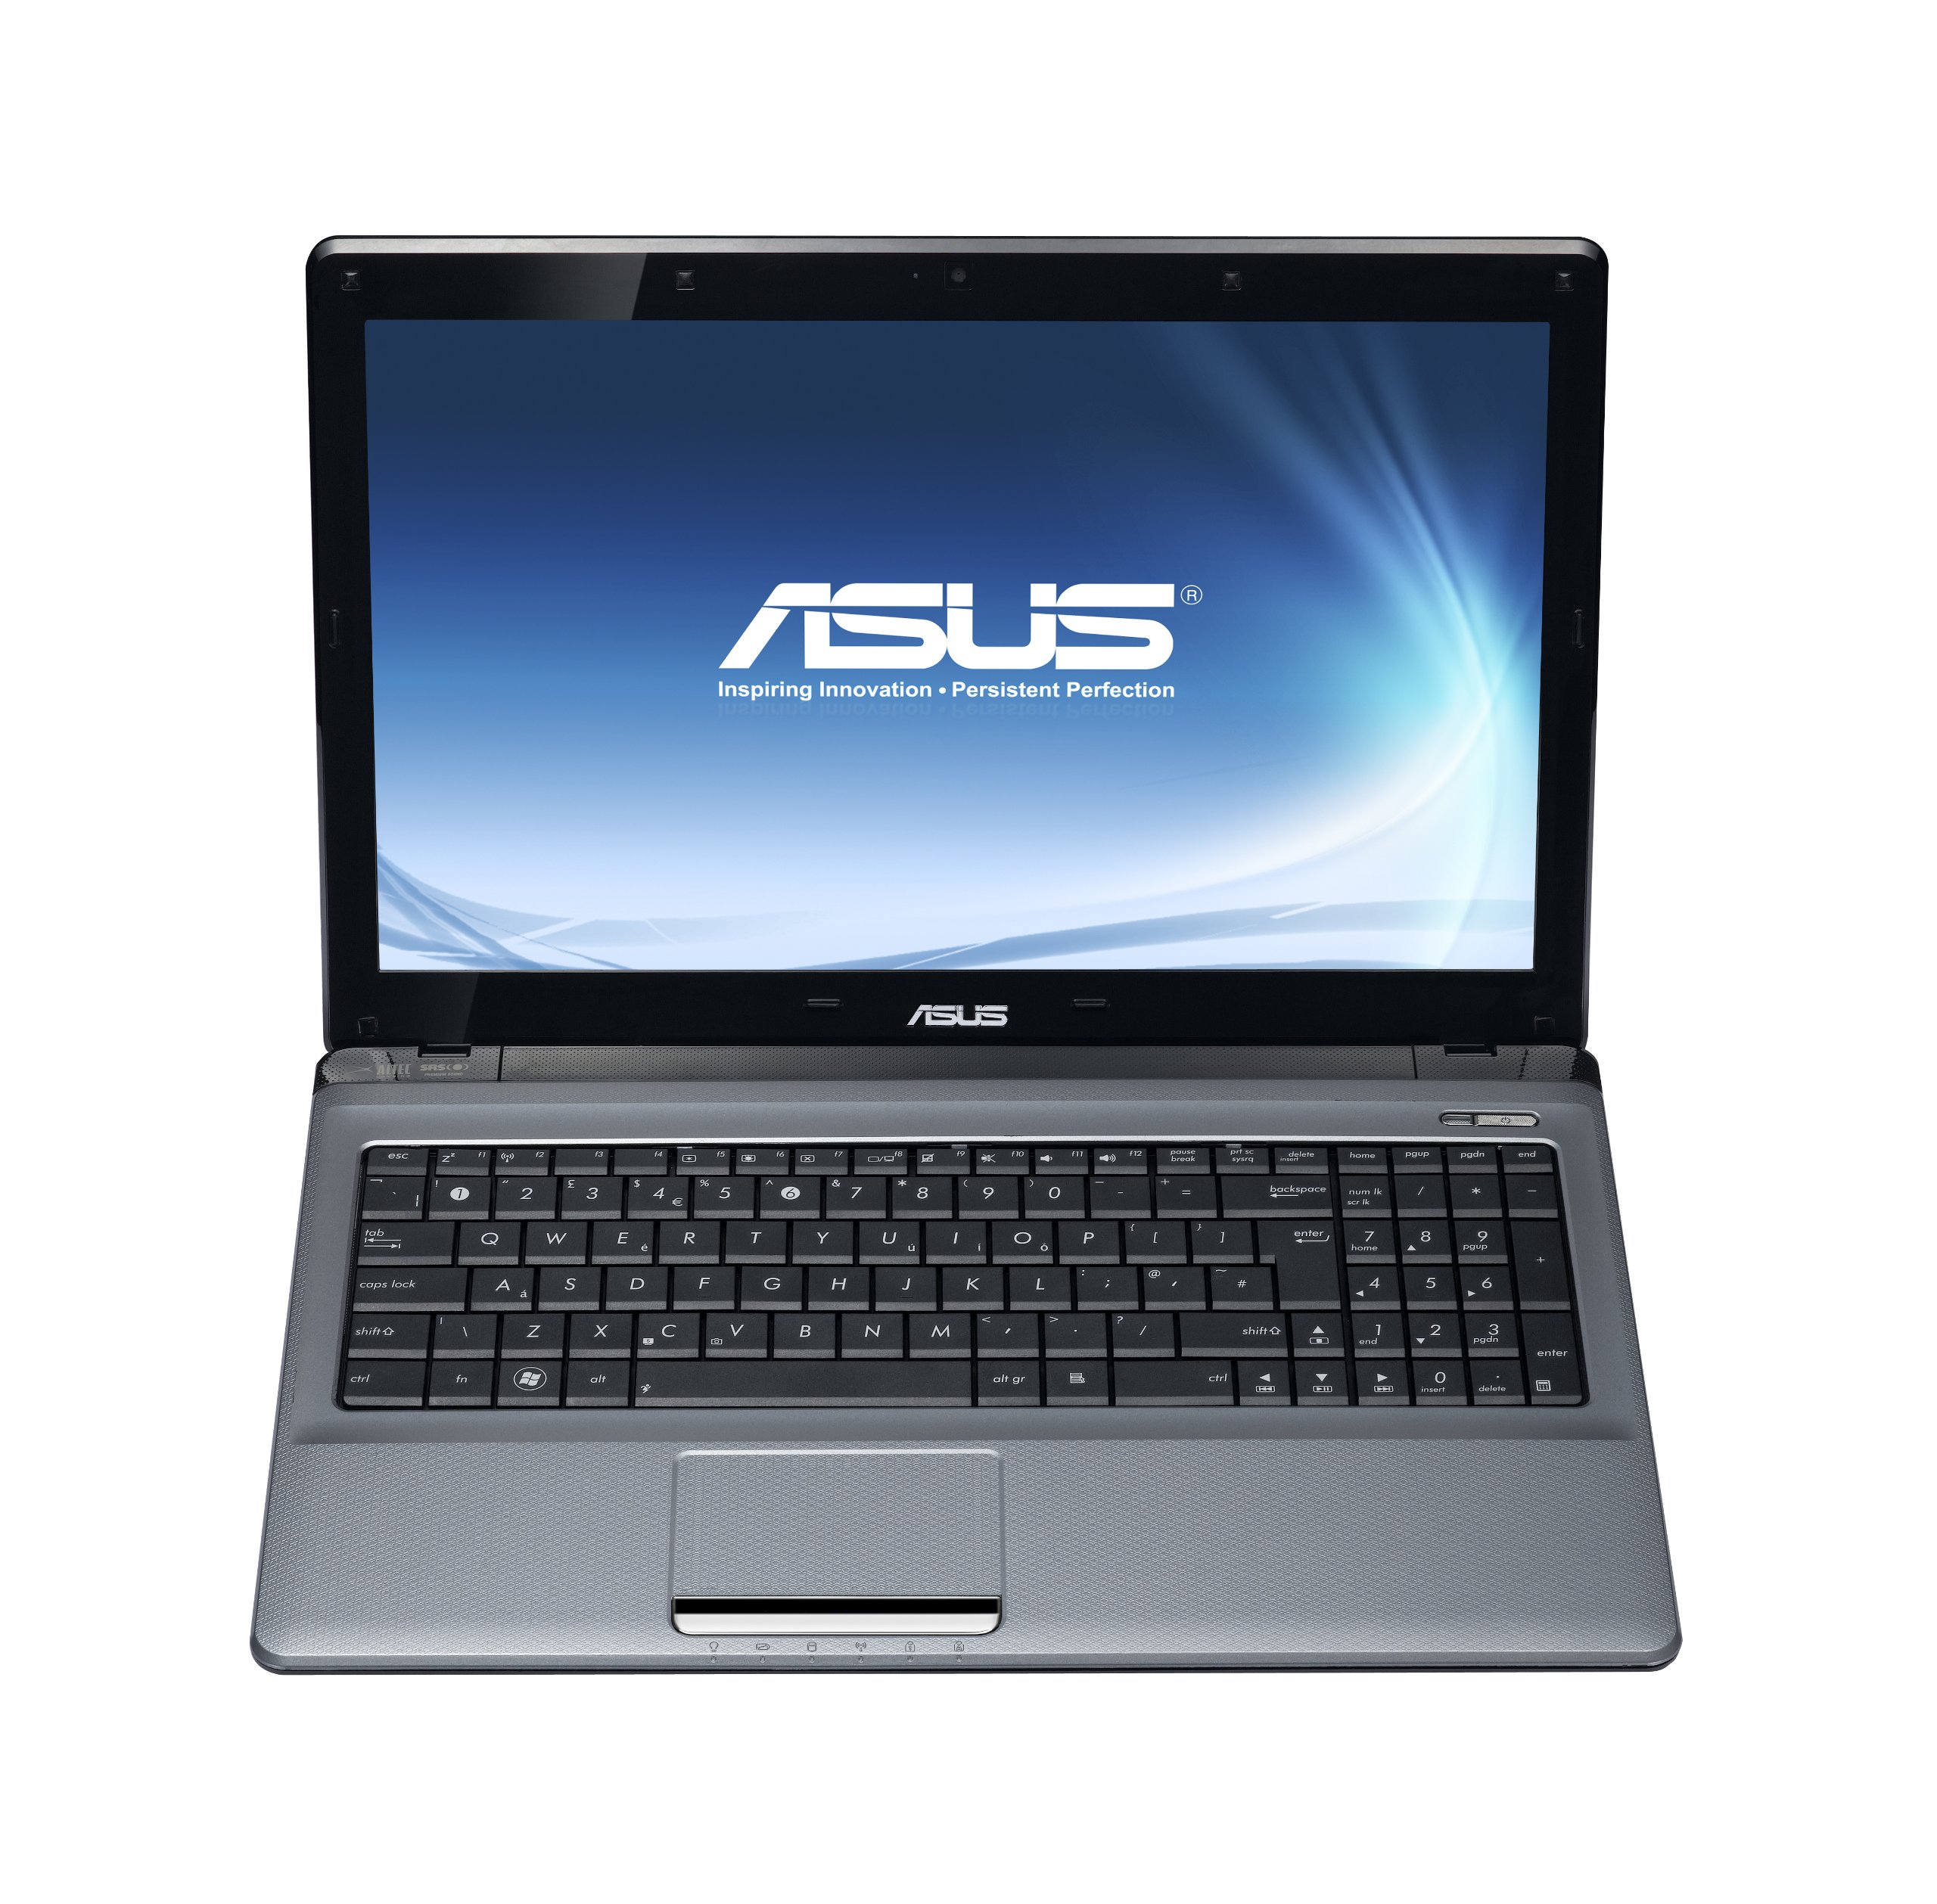 Asus A83SJ Notebook